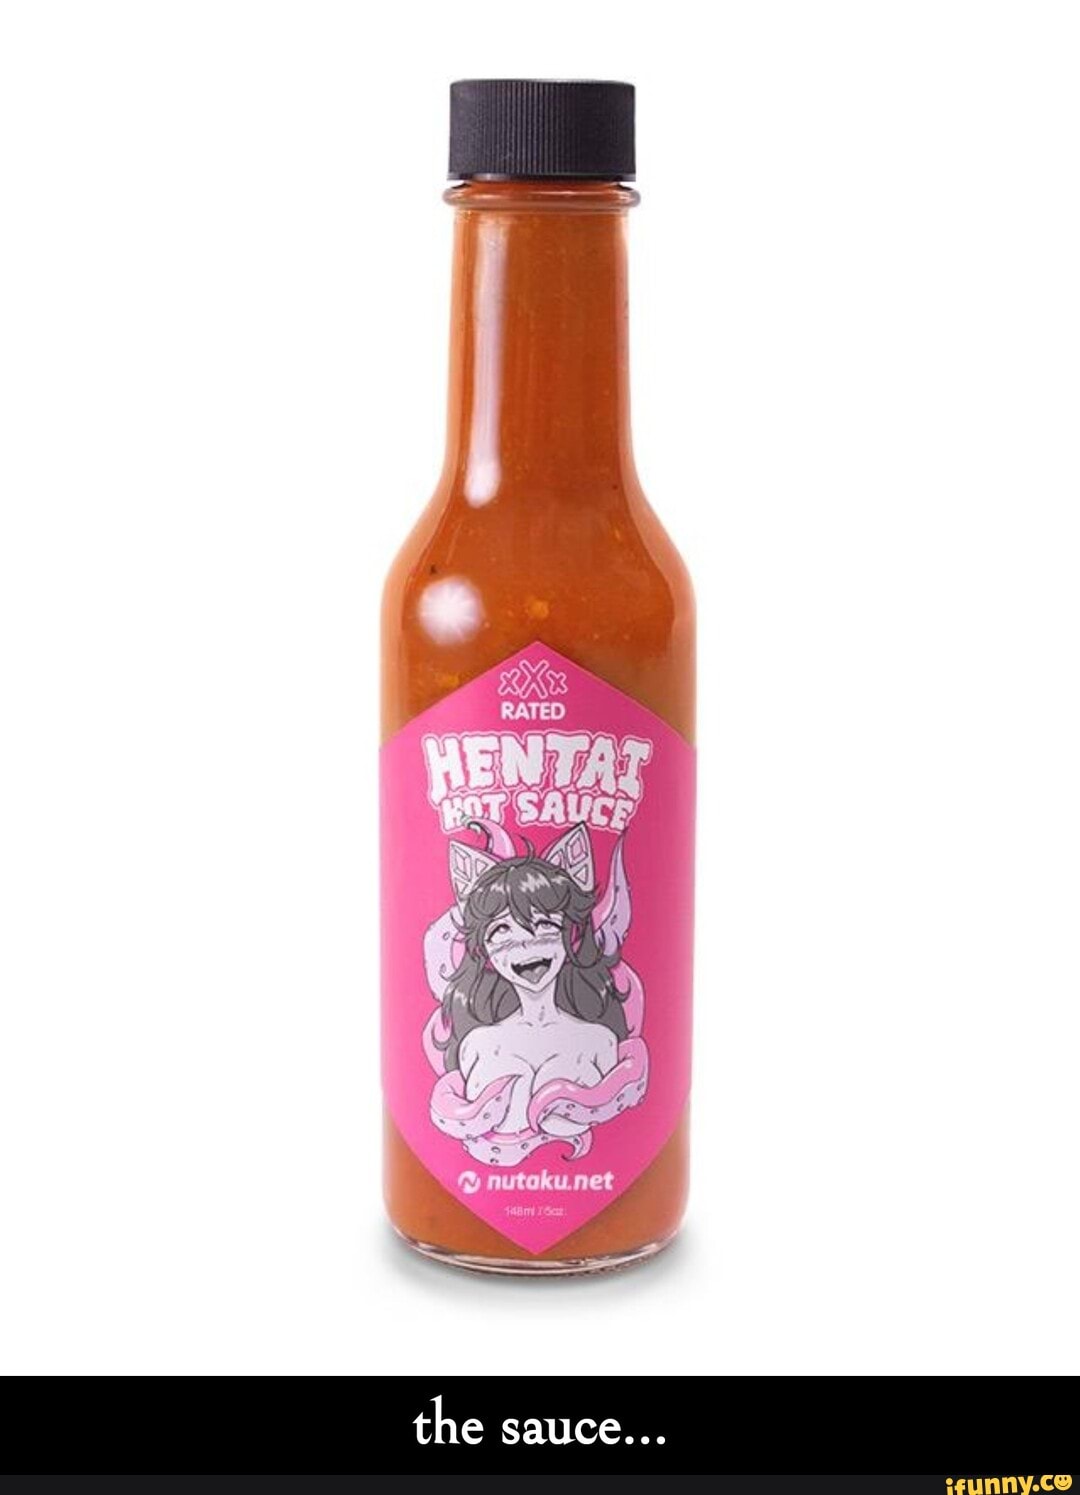 Hentia hot sauce